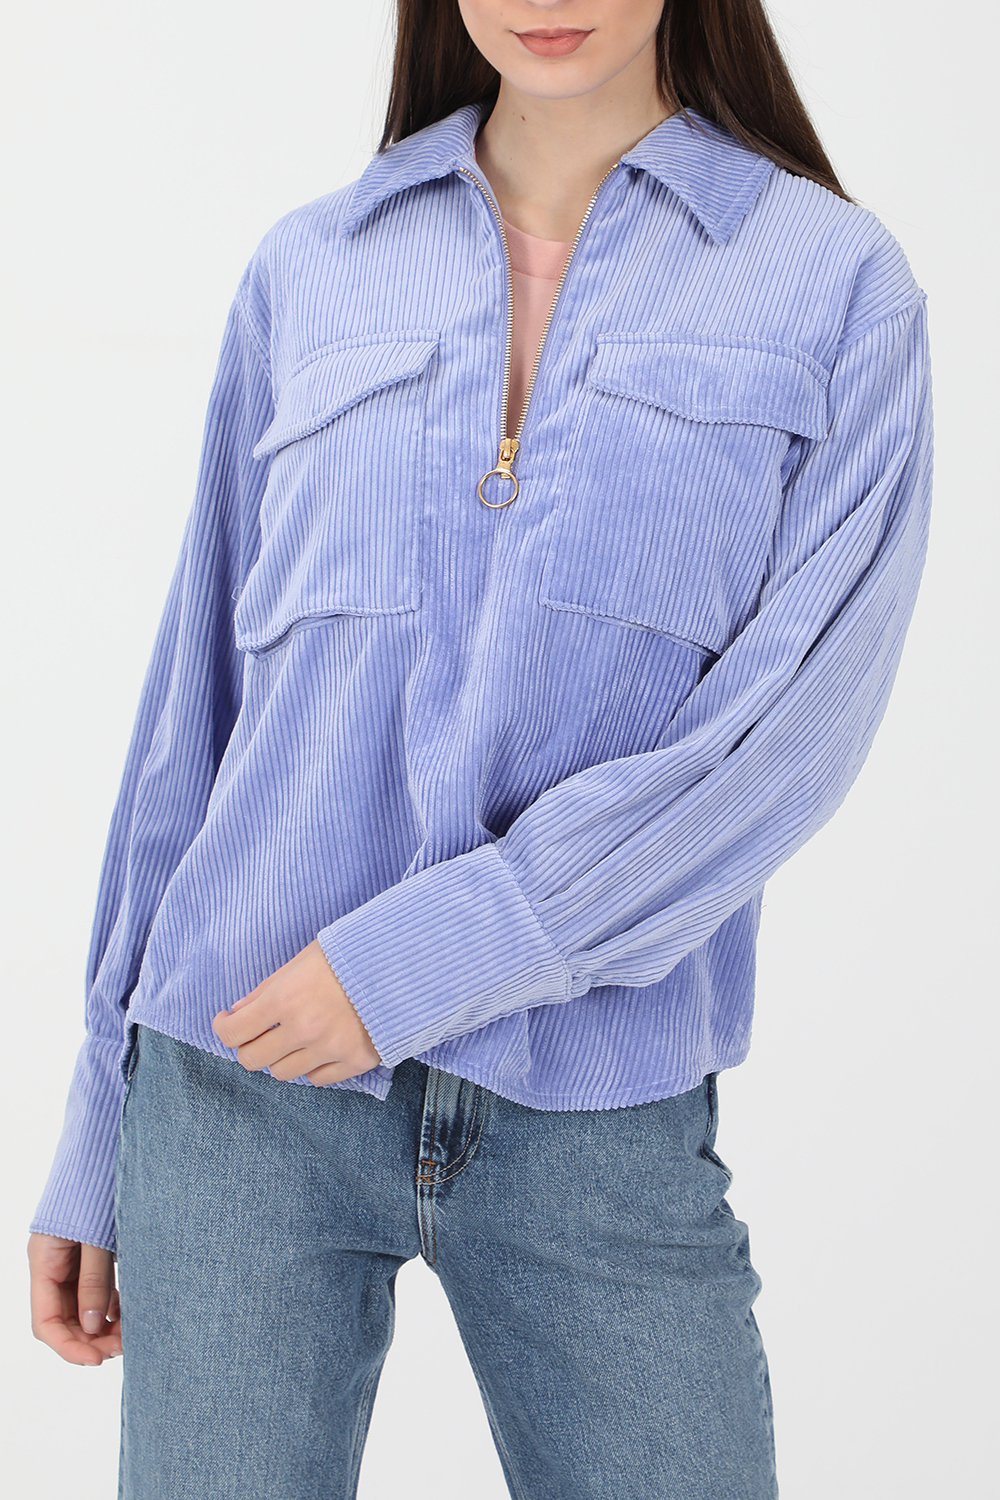 SCOTCH & SODA – Γυναικεία μπλούζα SCOTCH & SODA Utility rib cord top γαλάζια 1821120.0-0095